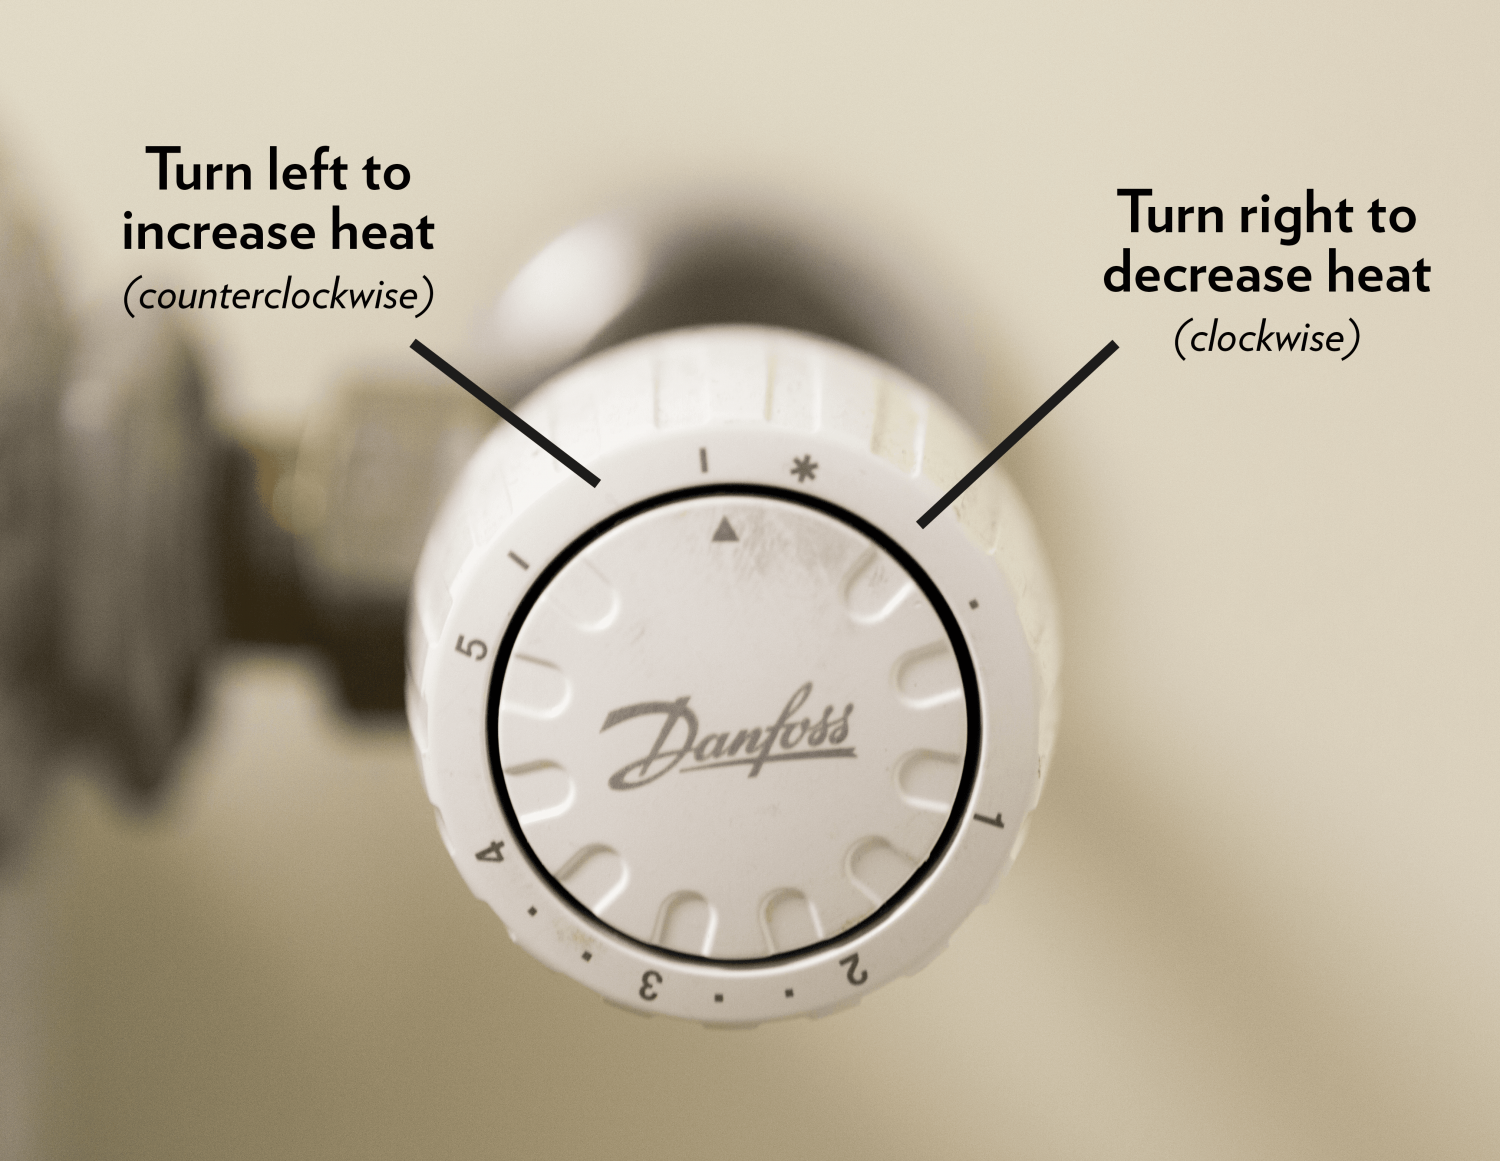 barnard-thermostat